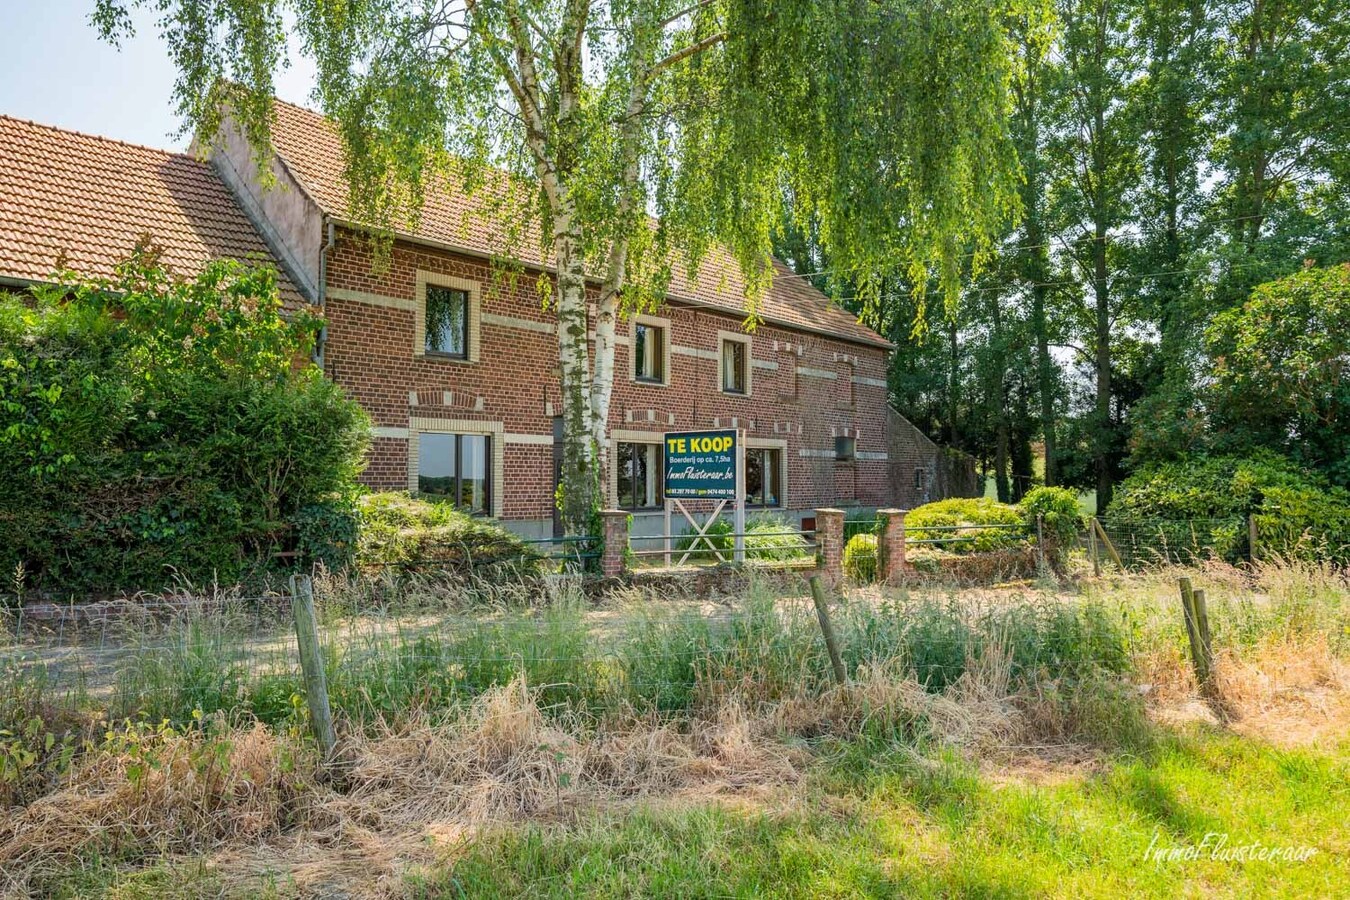 Property for sale in Tielt-Winge